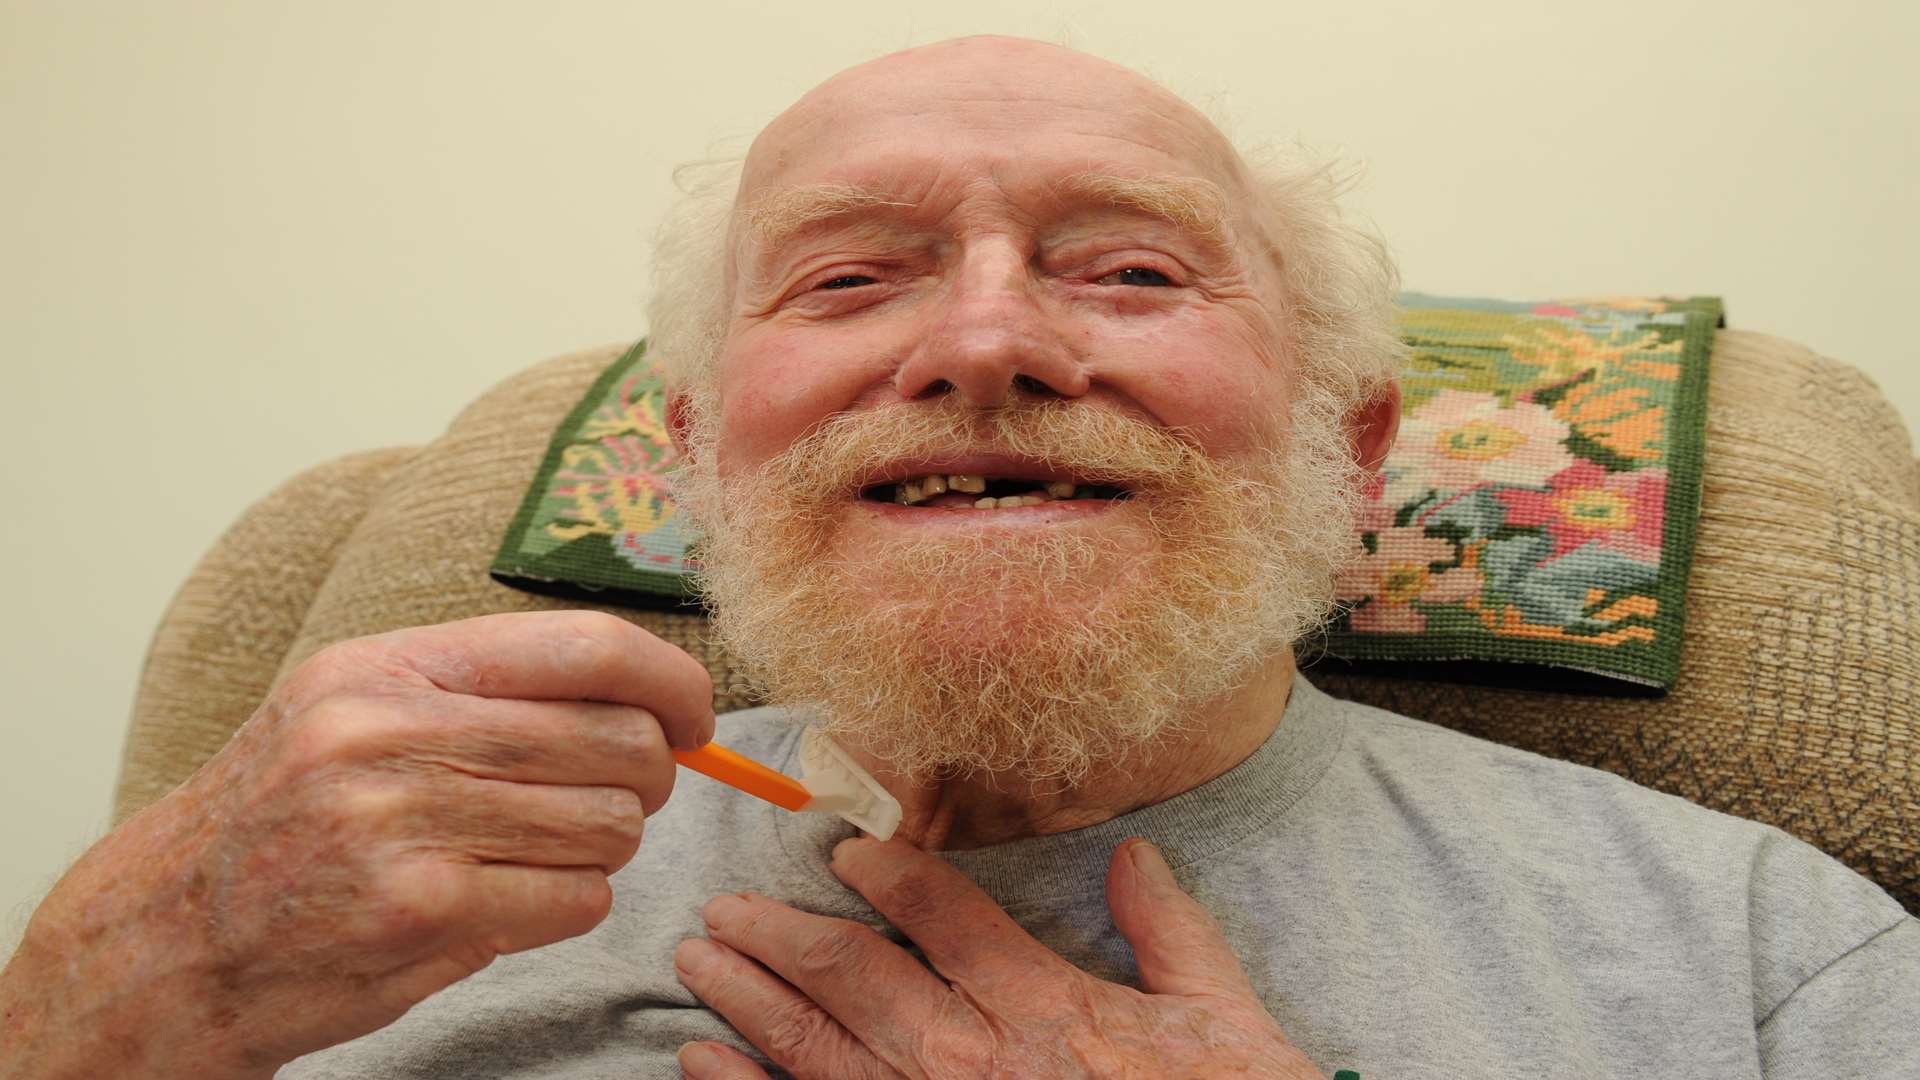 Richard Keeling, 87, is shaving his beard for charity